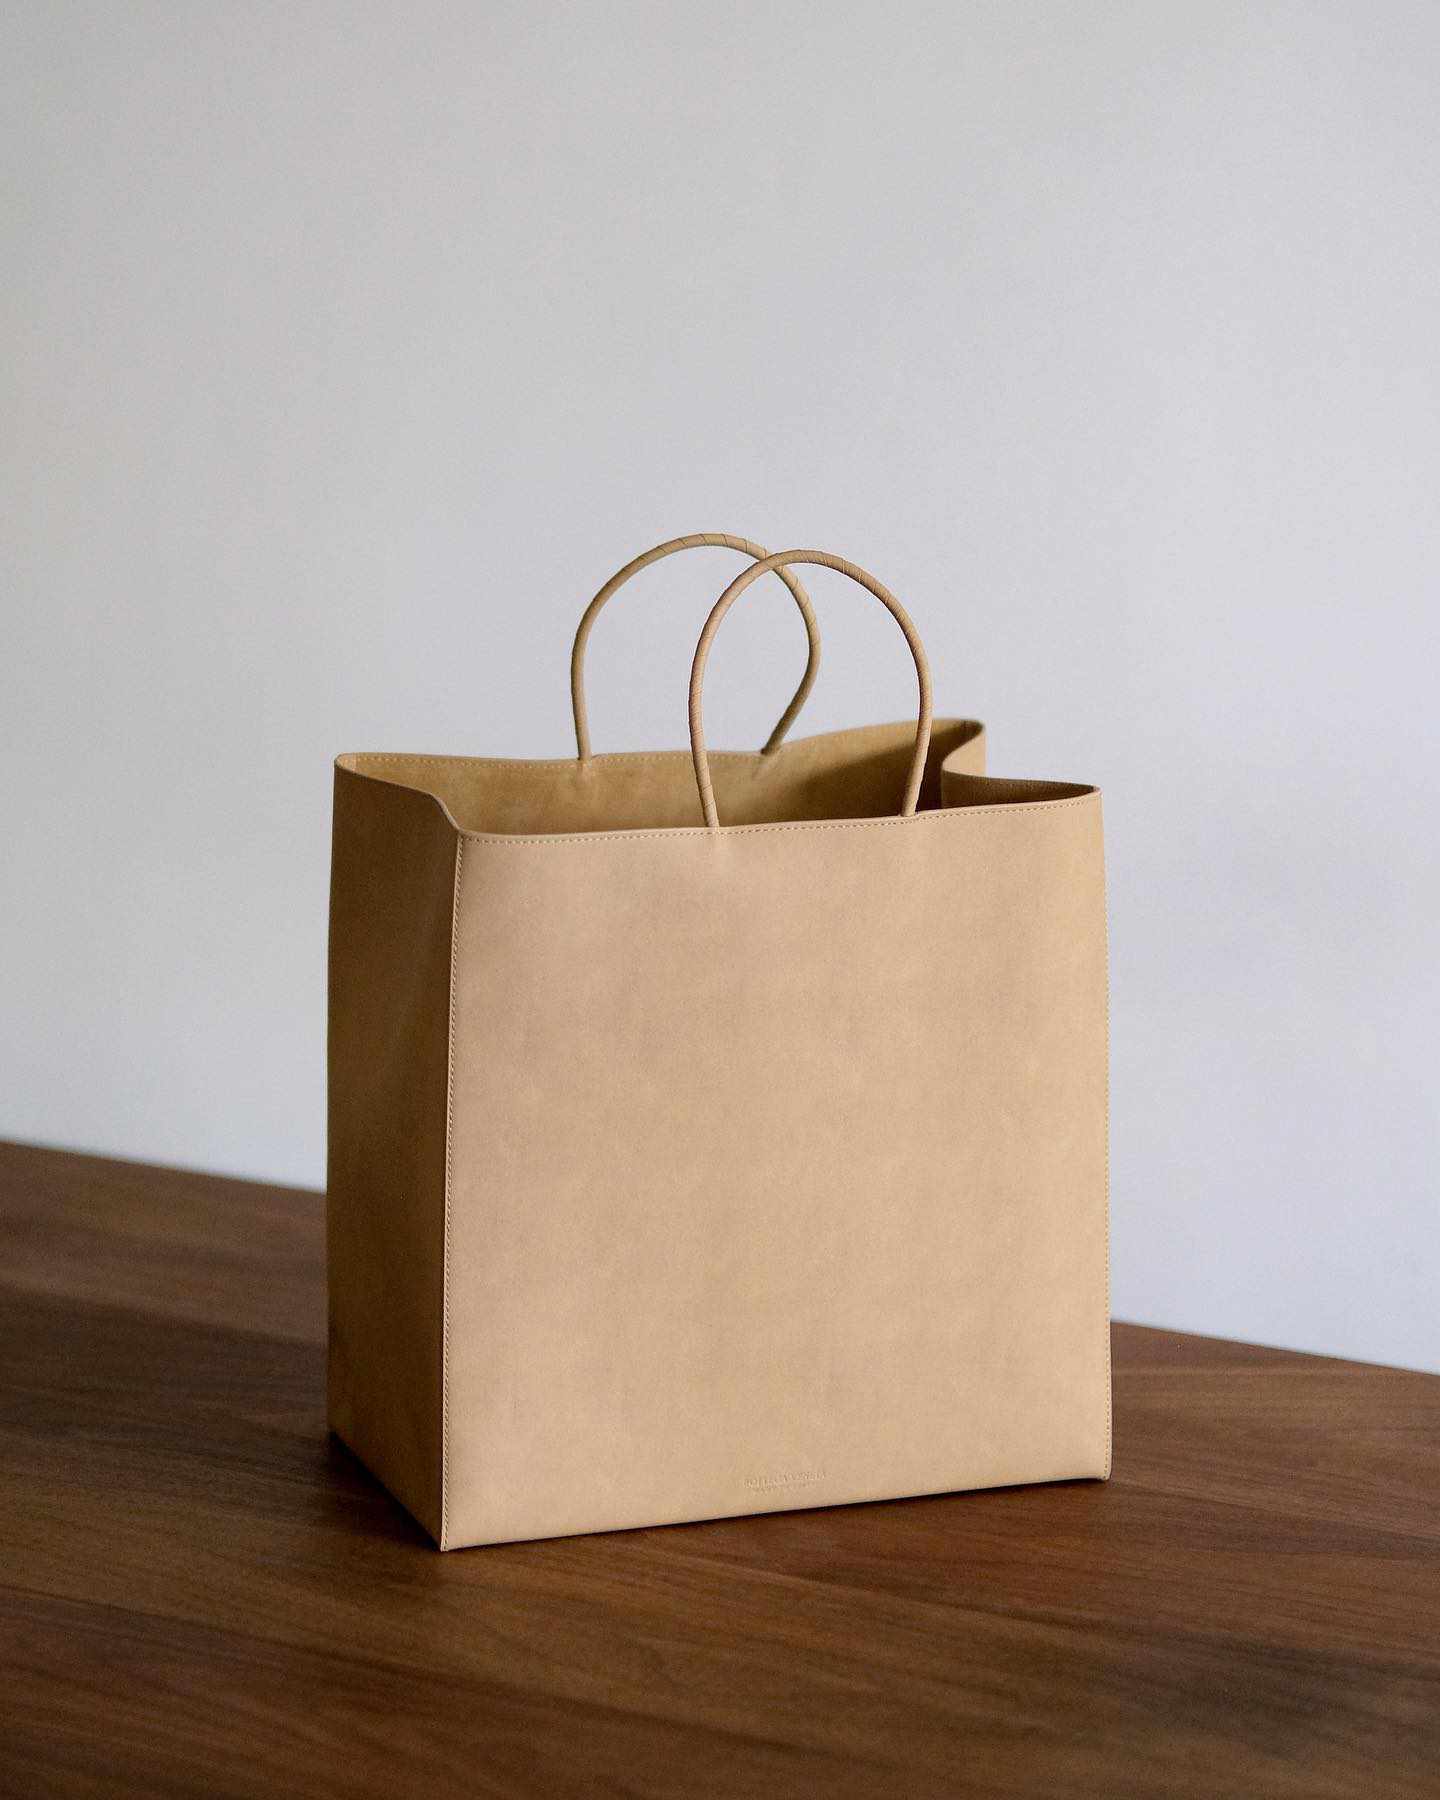 Louis Vuitton Paper Shopping Bag -  Finland